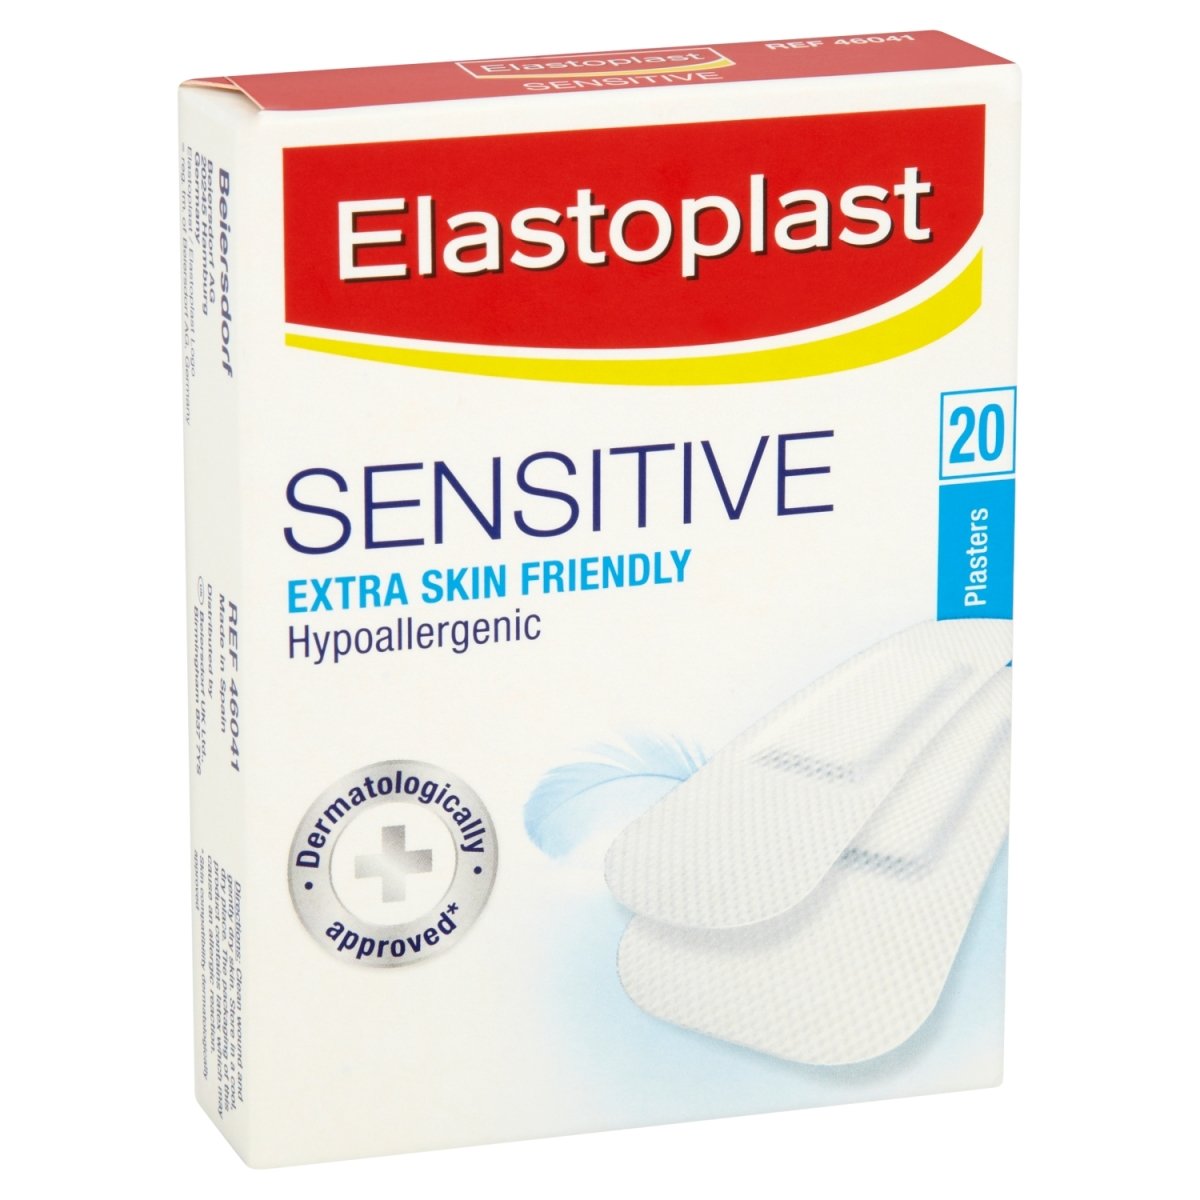 Elastoplast Sensitive Plasters - Intamarque 4005800237447